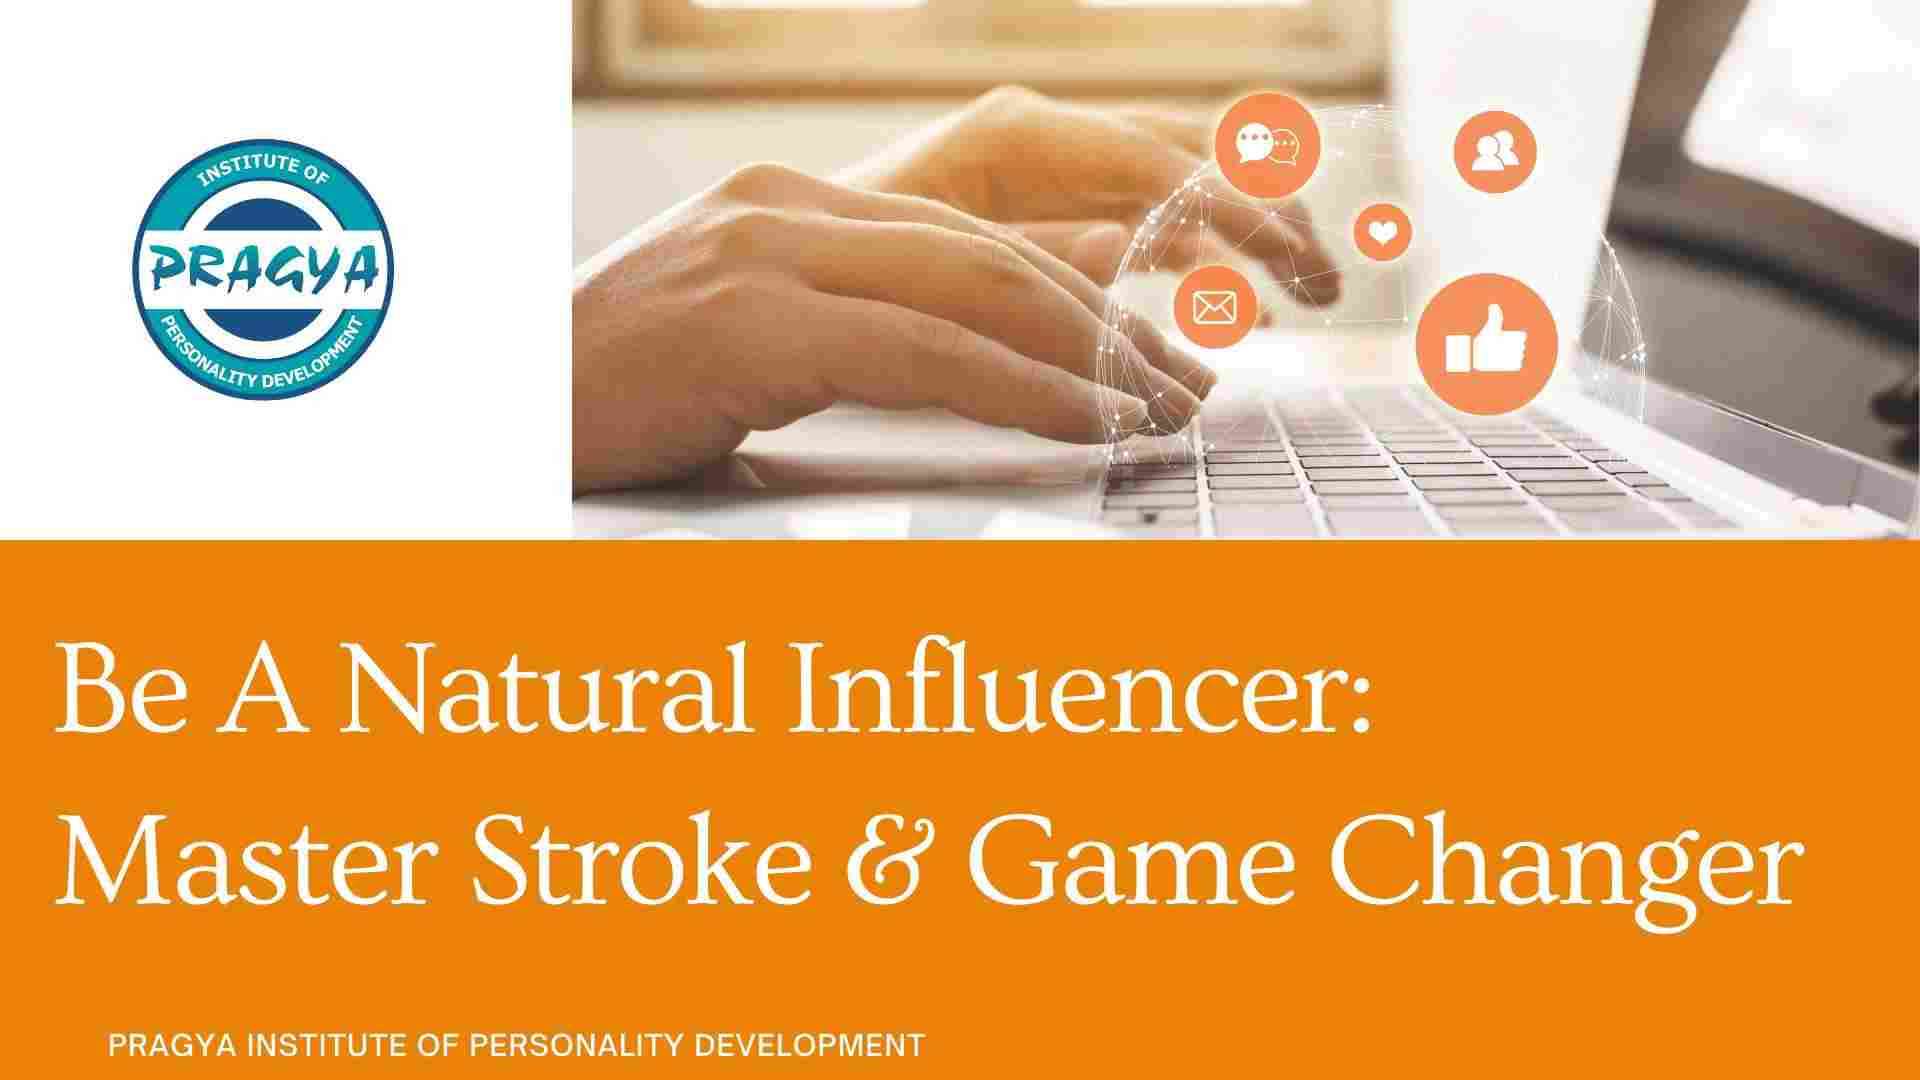 Be A Natural Influencer: Master Stroke & Game Changer